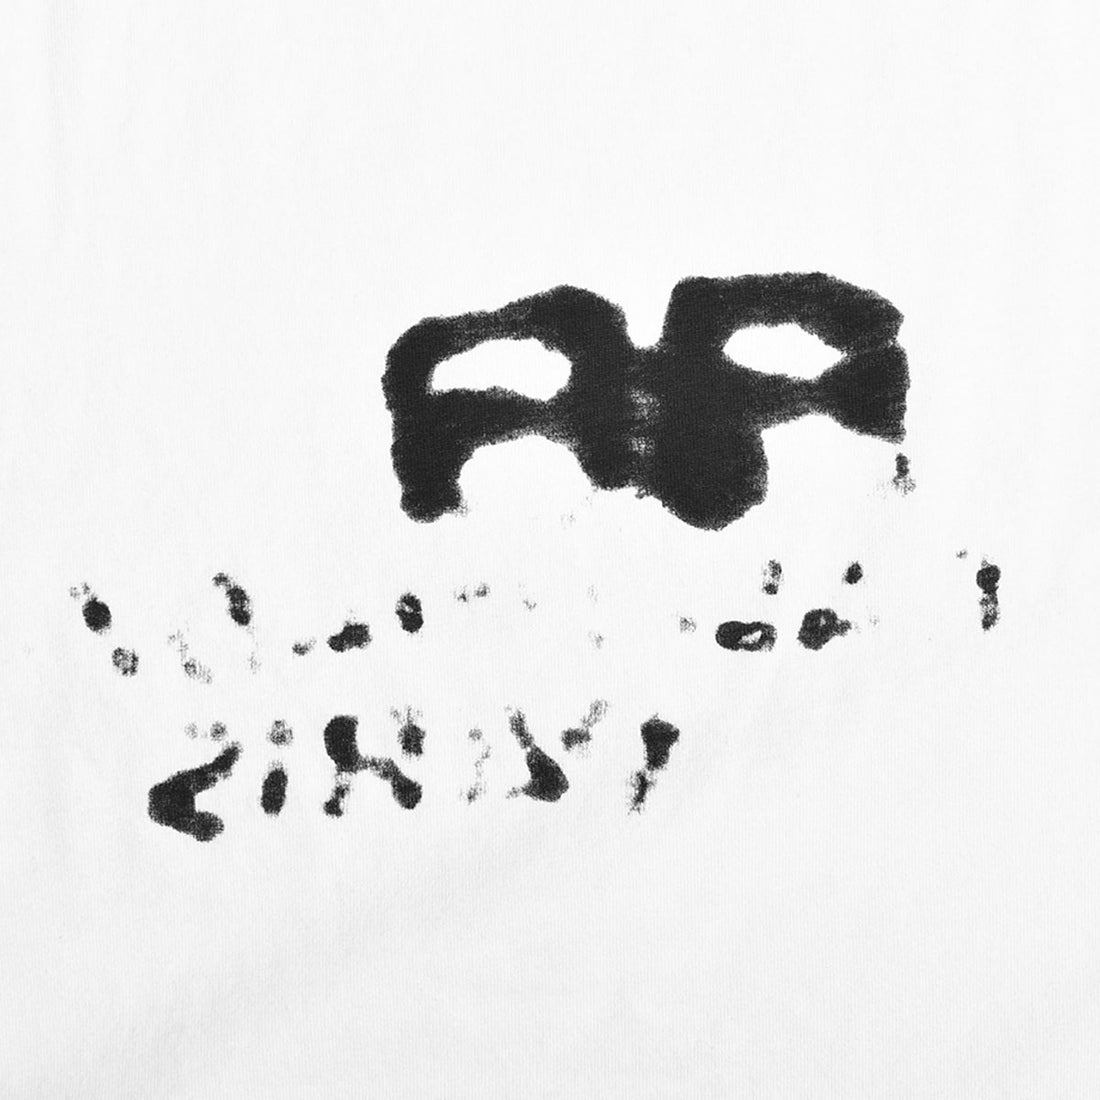 [BALENCIAGA]Medium Fit T-Shirt/WHITE(612966TNVN4)